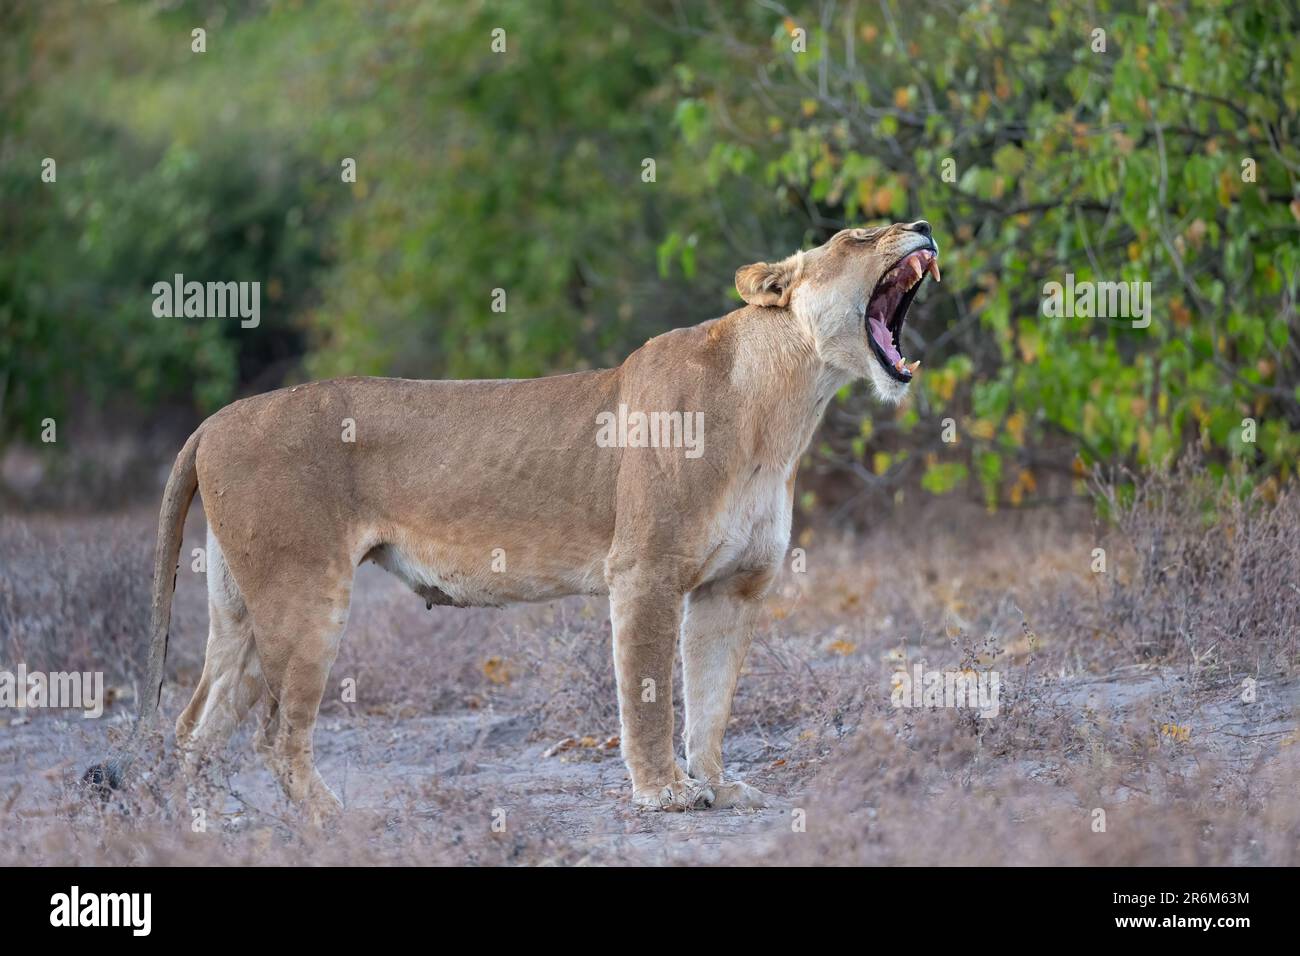 Lioness (Panthera leo), Chobe National Park, Botswana, Africa Stock Photo